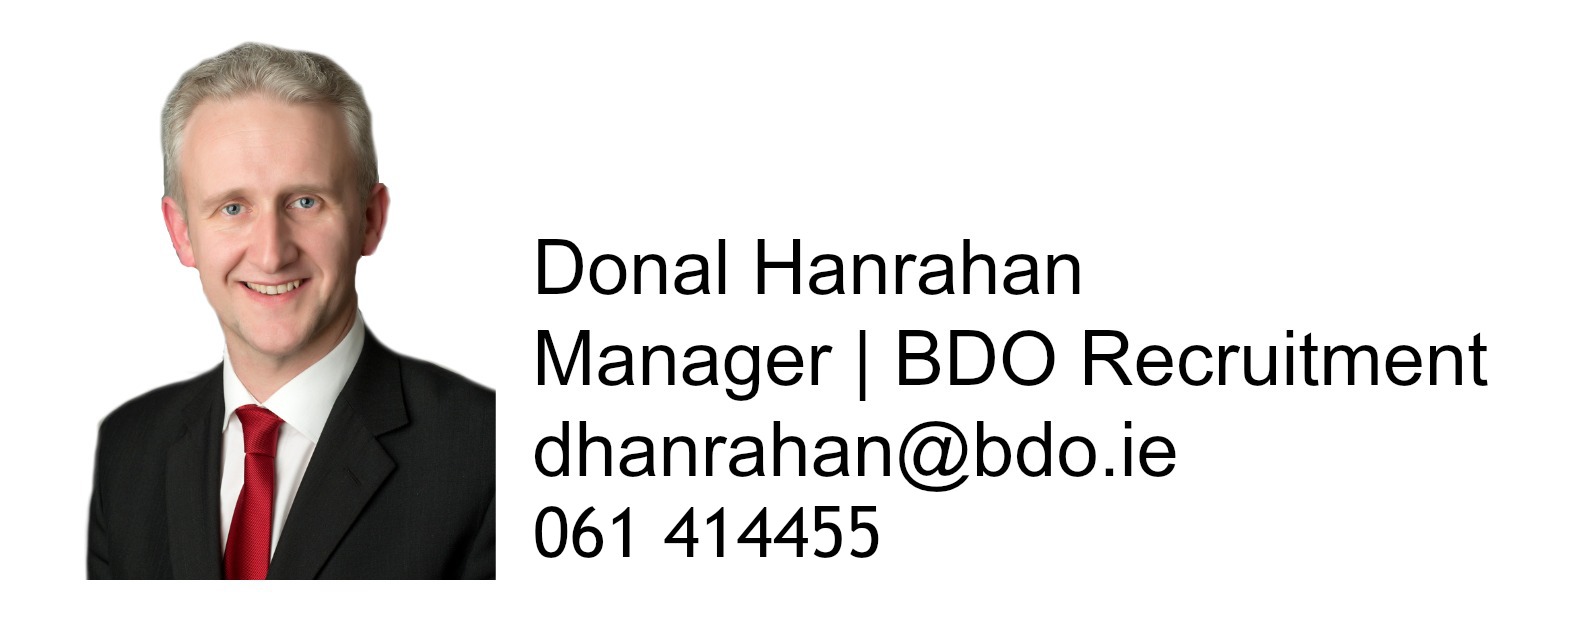 Donal Hanrahan email signature 2